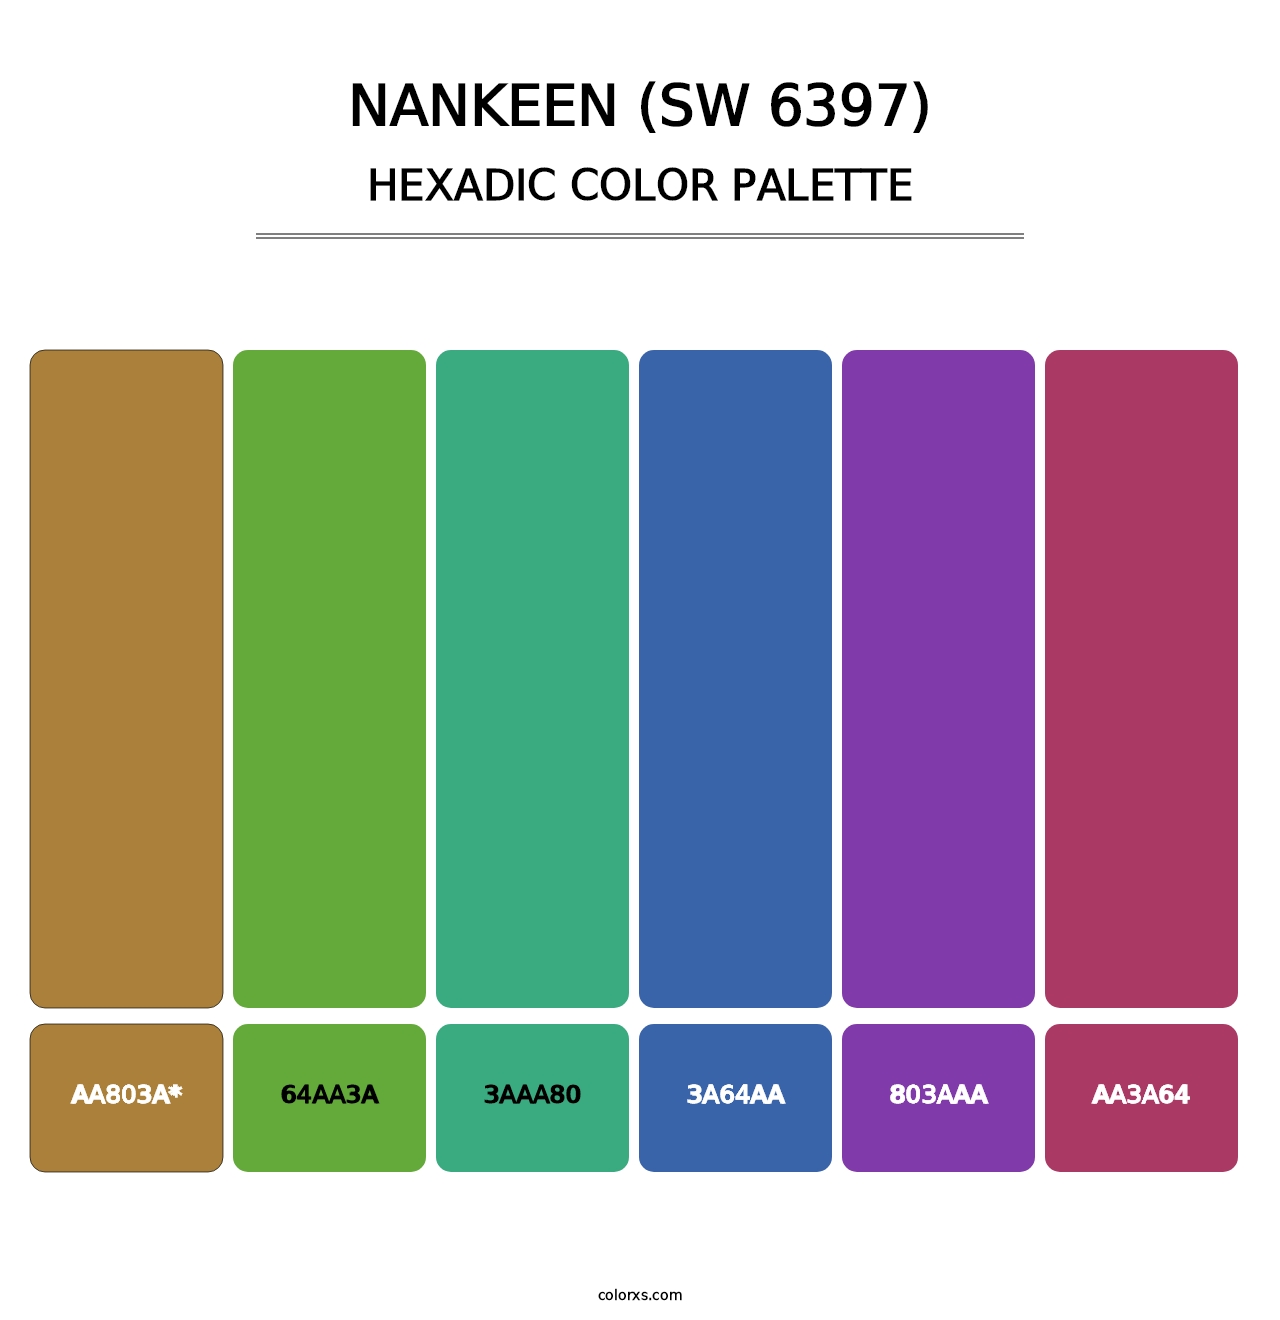 Nankeen (SW 6397) - Hexadic Color Palette